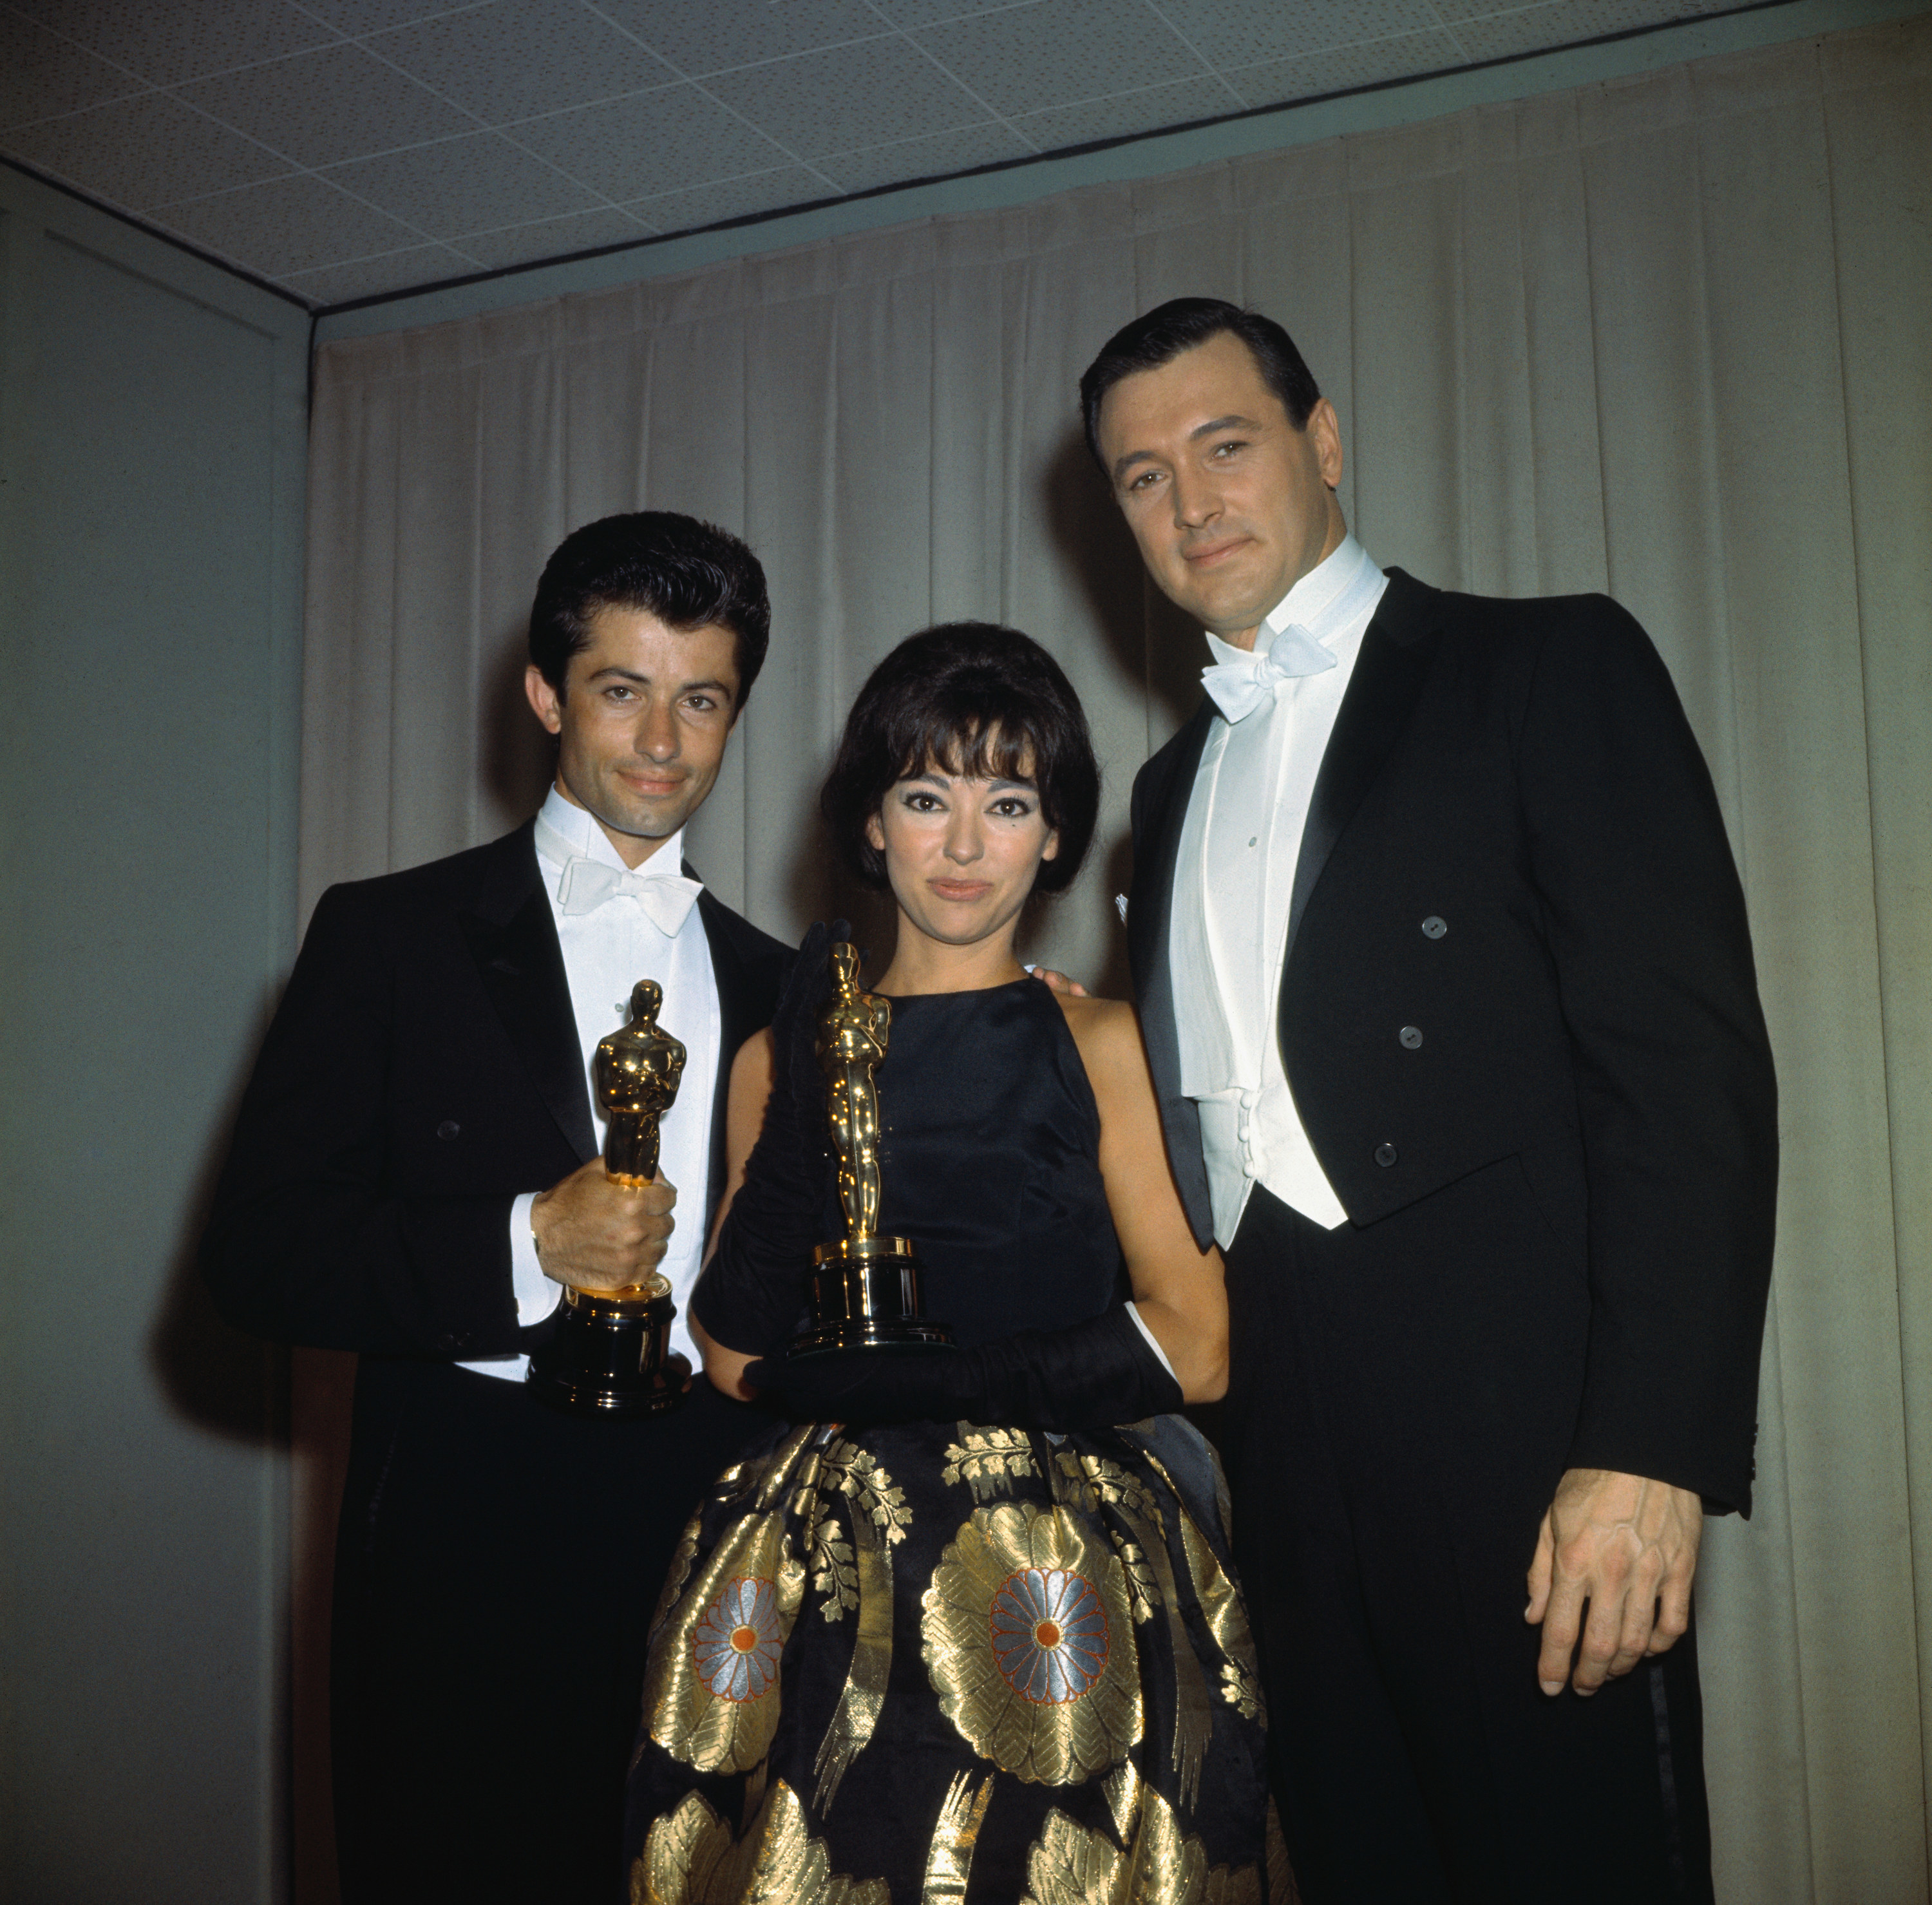 George Chakiris, Rita Moreno and Rock Hudson pose together at the 1962 Academy Awards